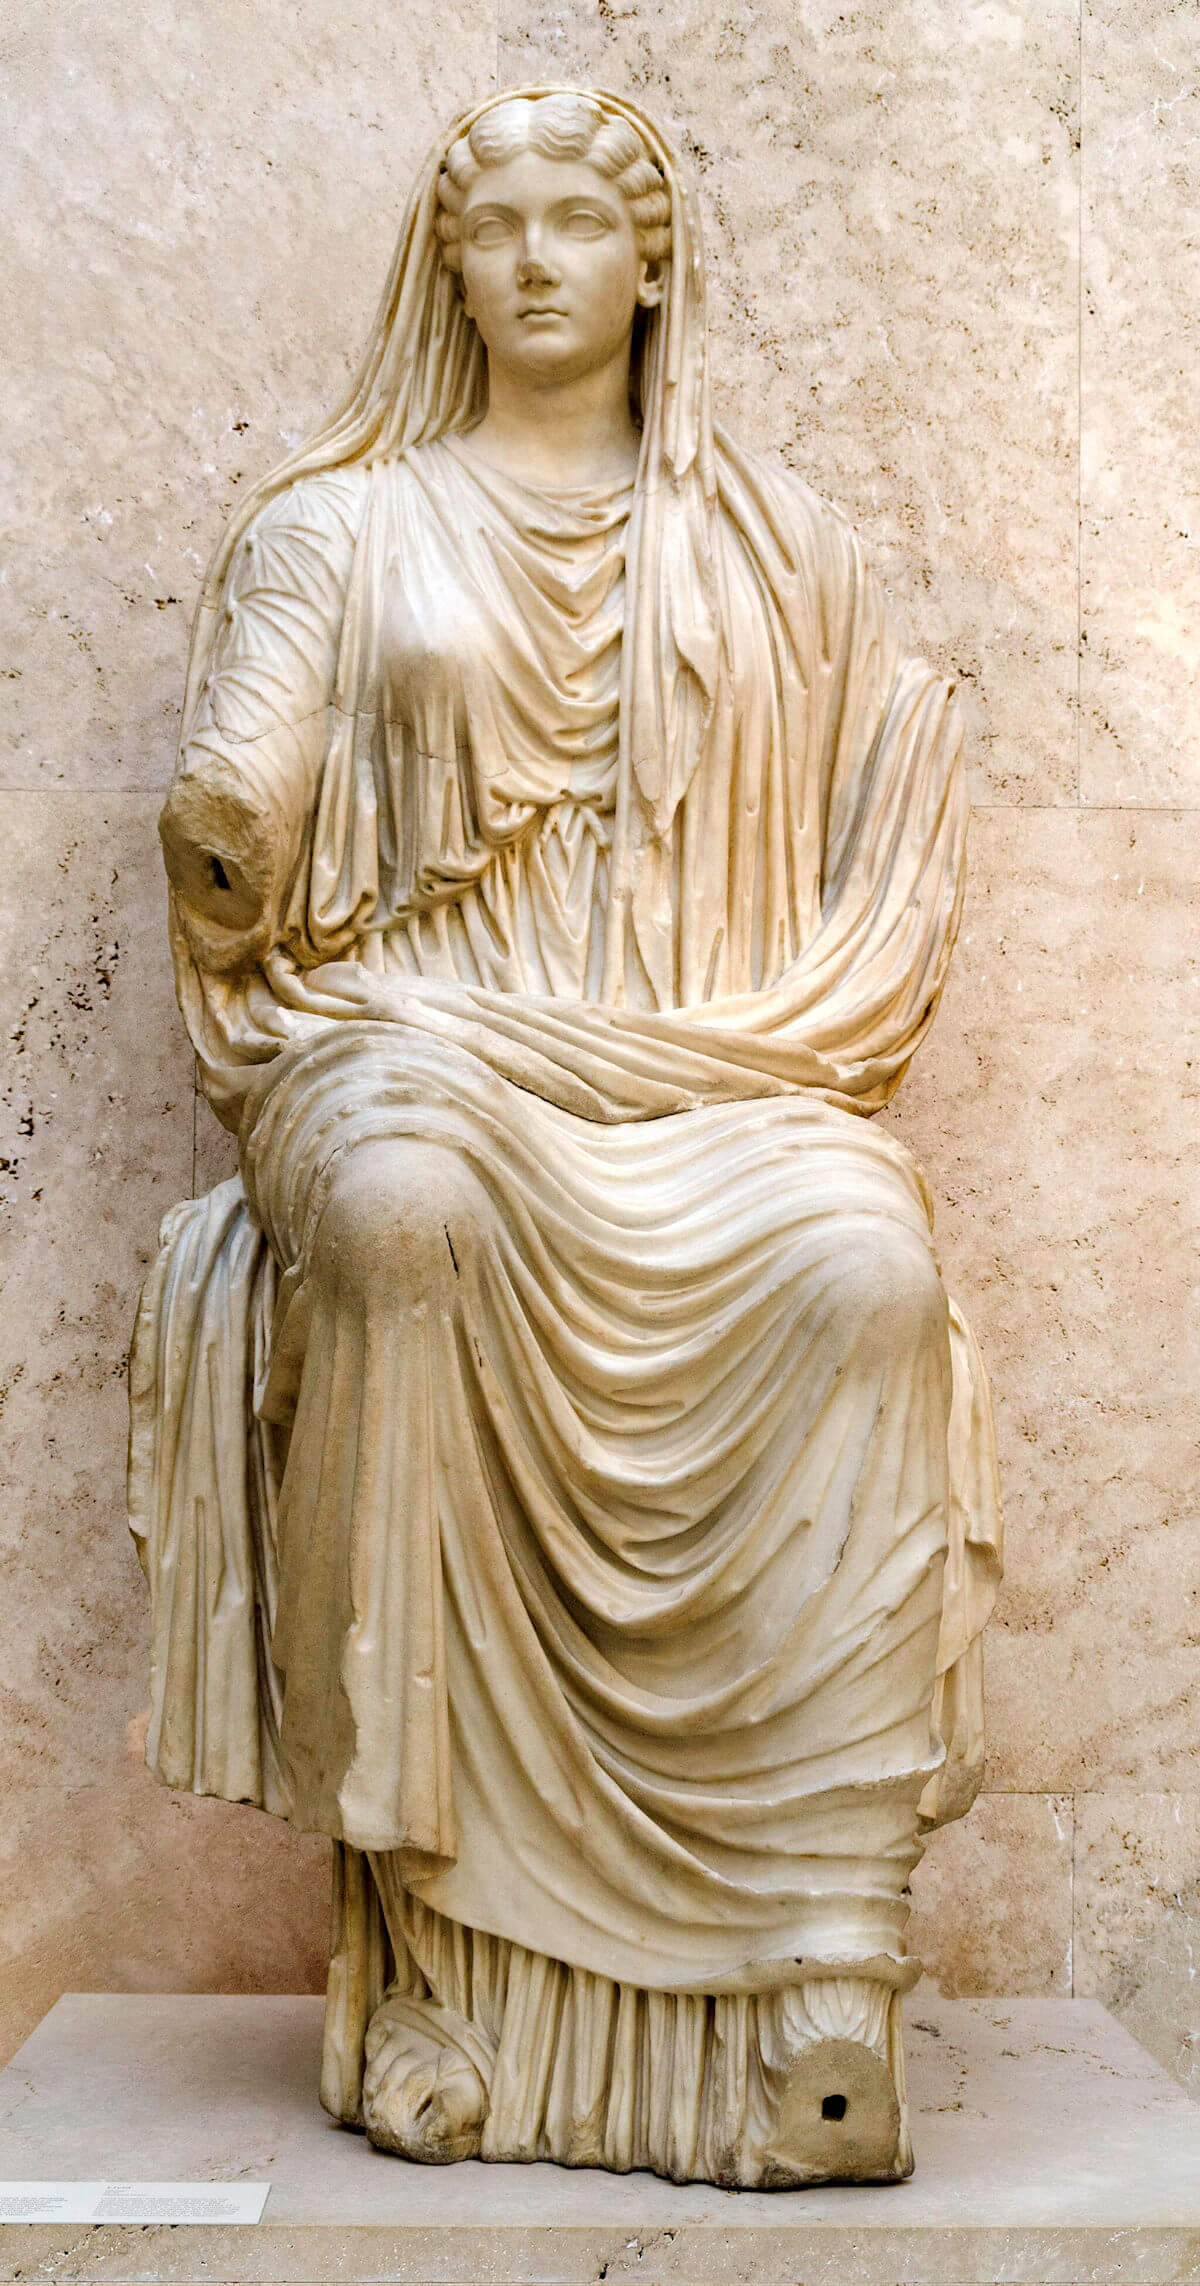 A statue of Livia Drusilla wearing a stola and palla